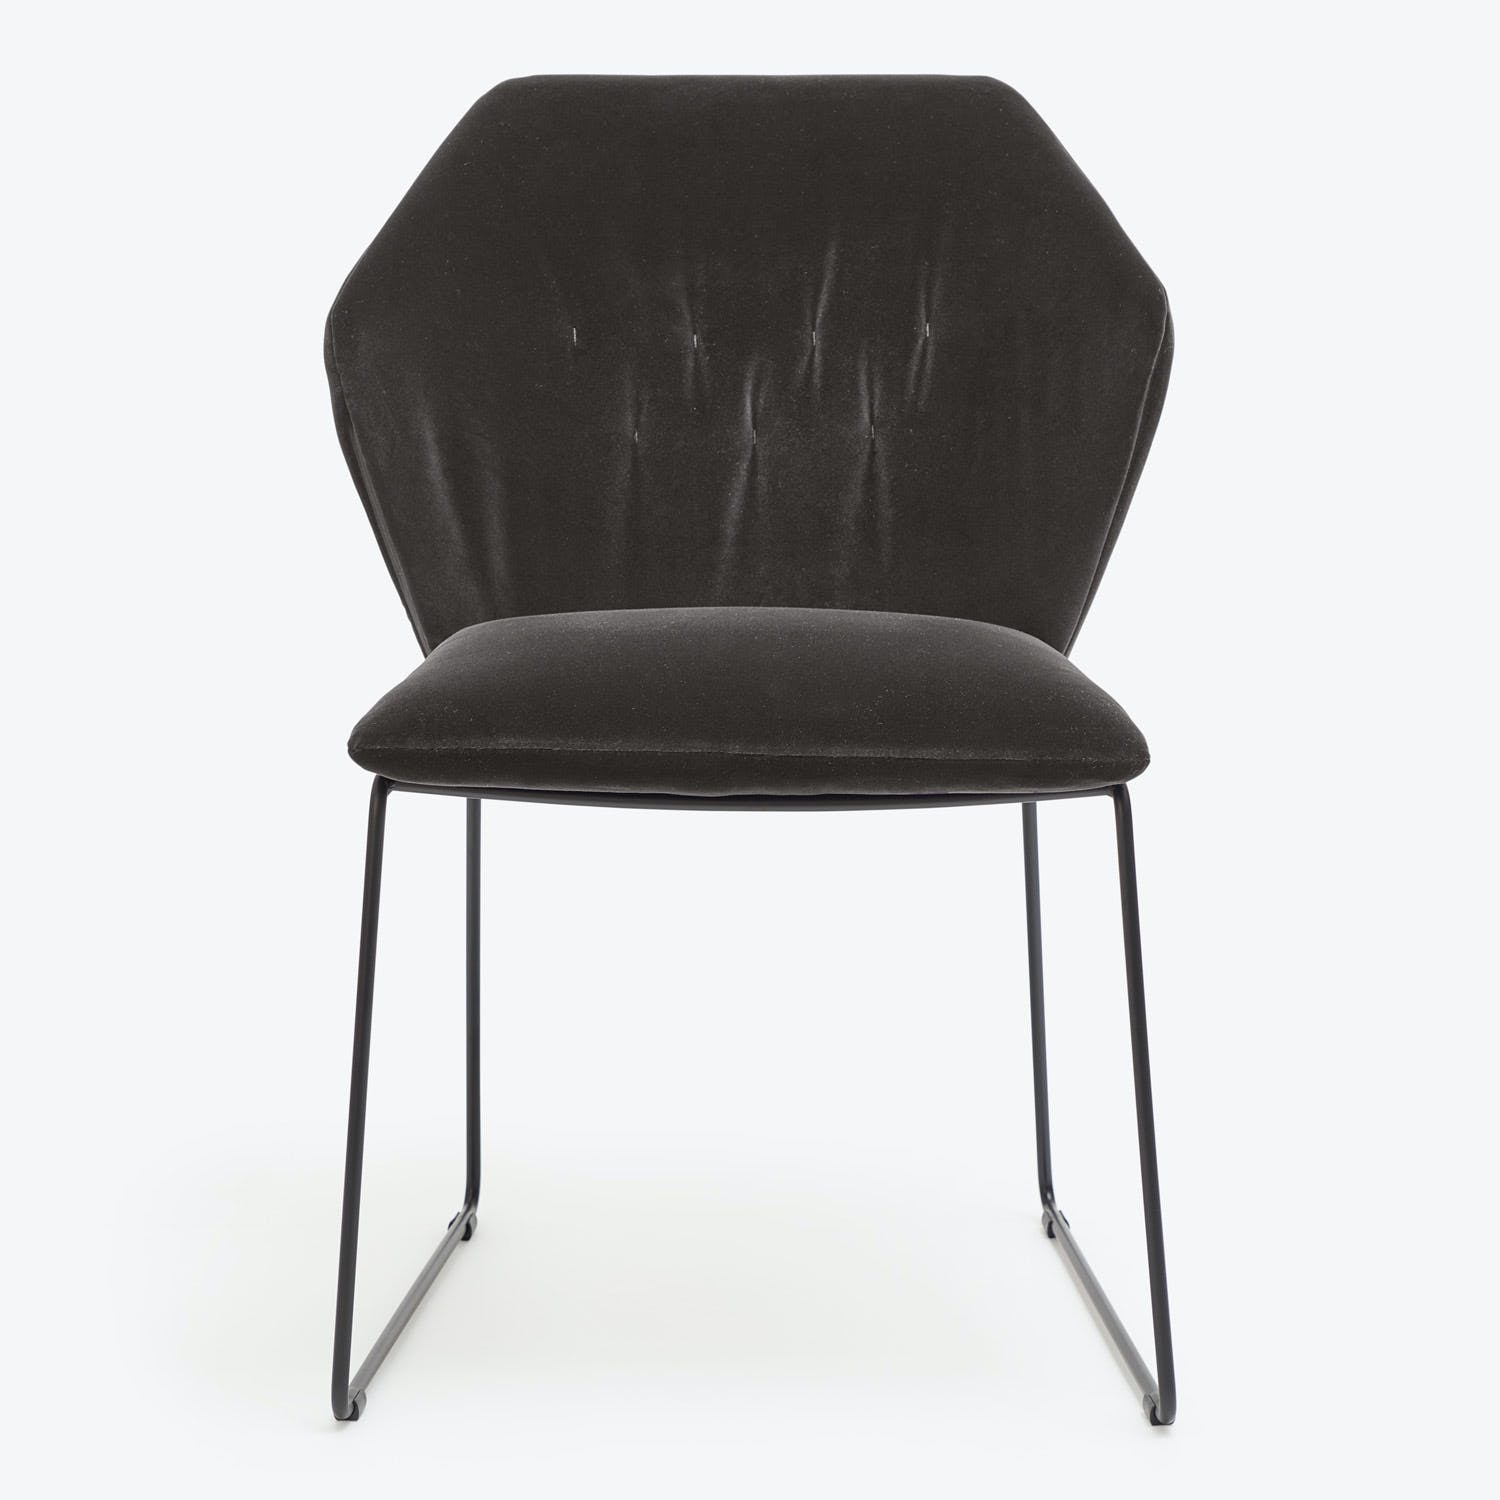 Modern black chair with plush upholstery and sleek metal frame.